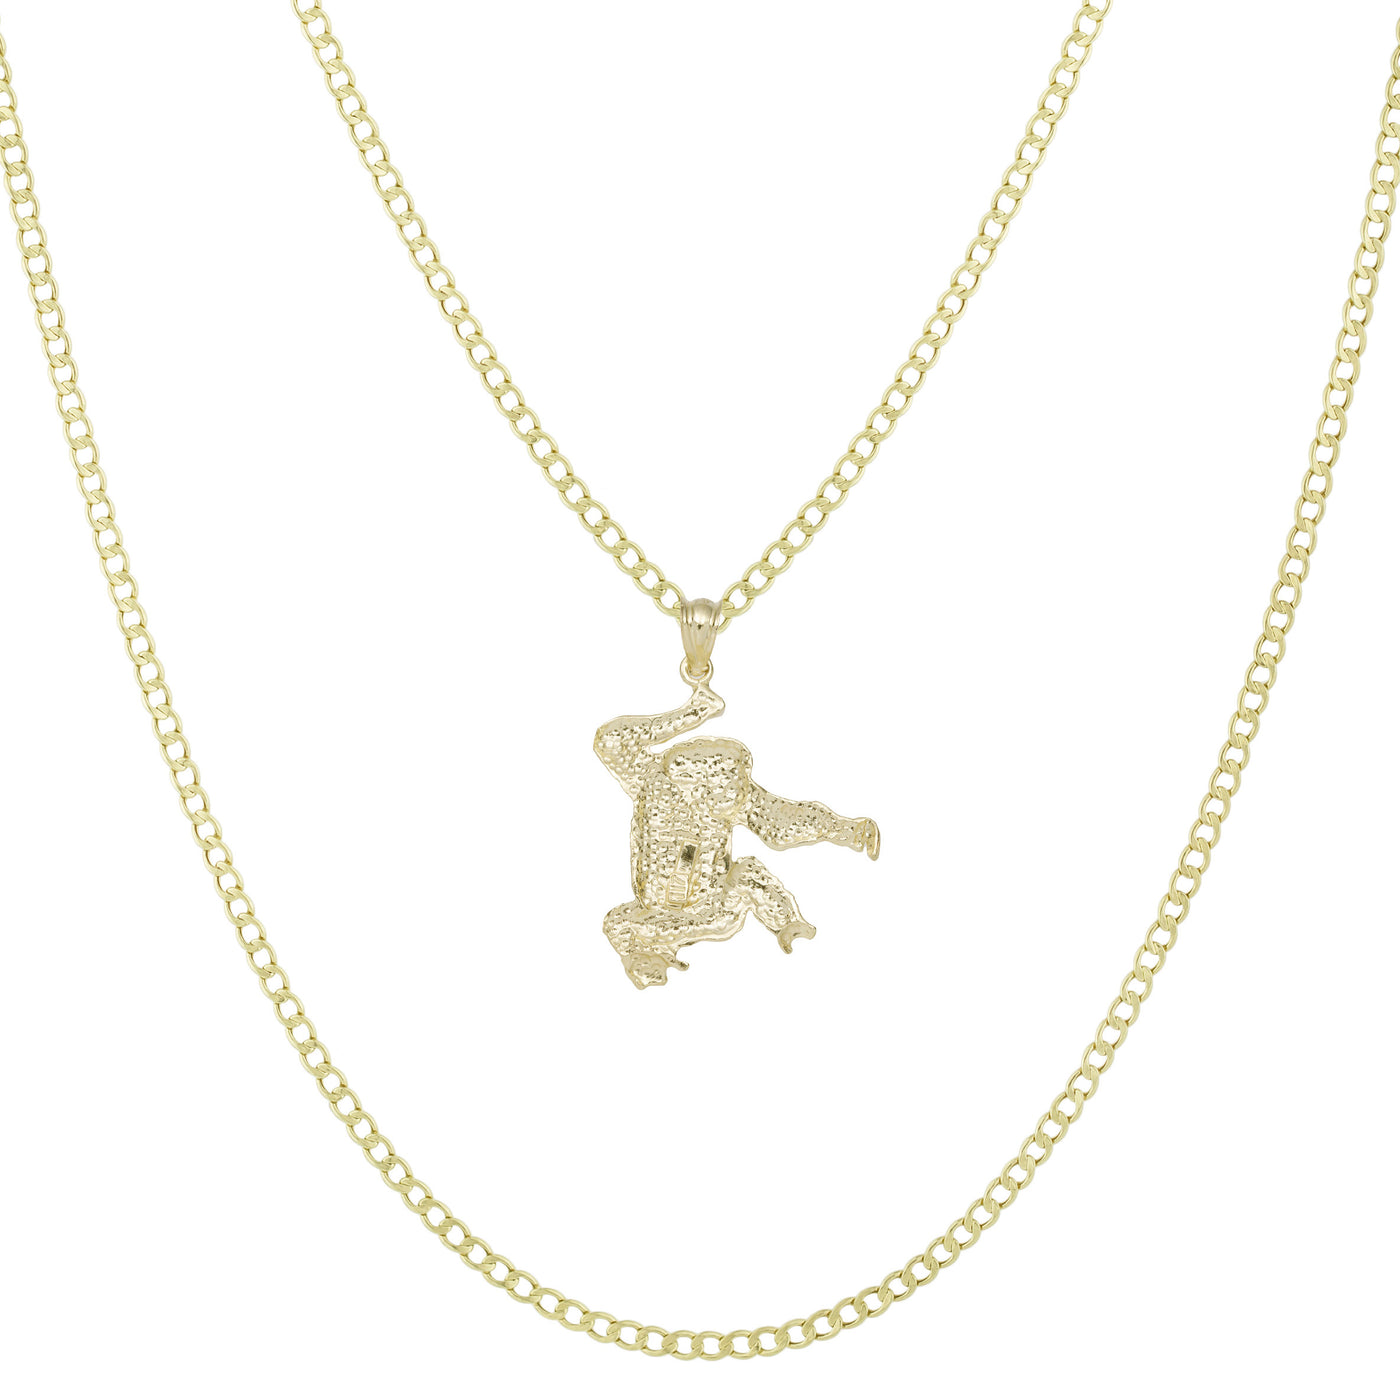 1 3/8" Diamond Cut Chimpanzee Pendant & Chain Necklace Set 10K Yellow Gold